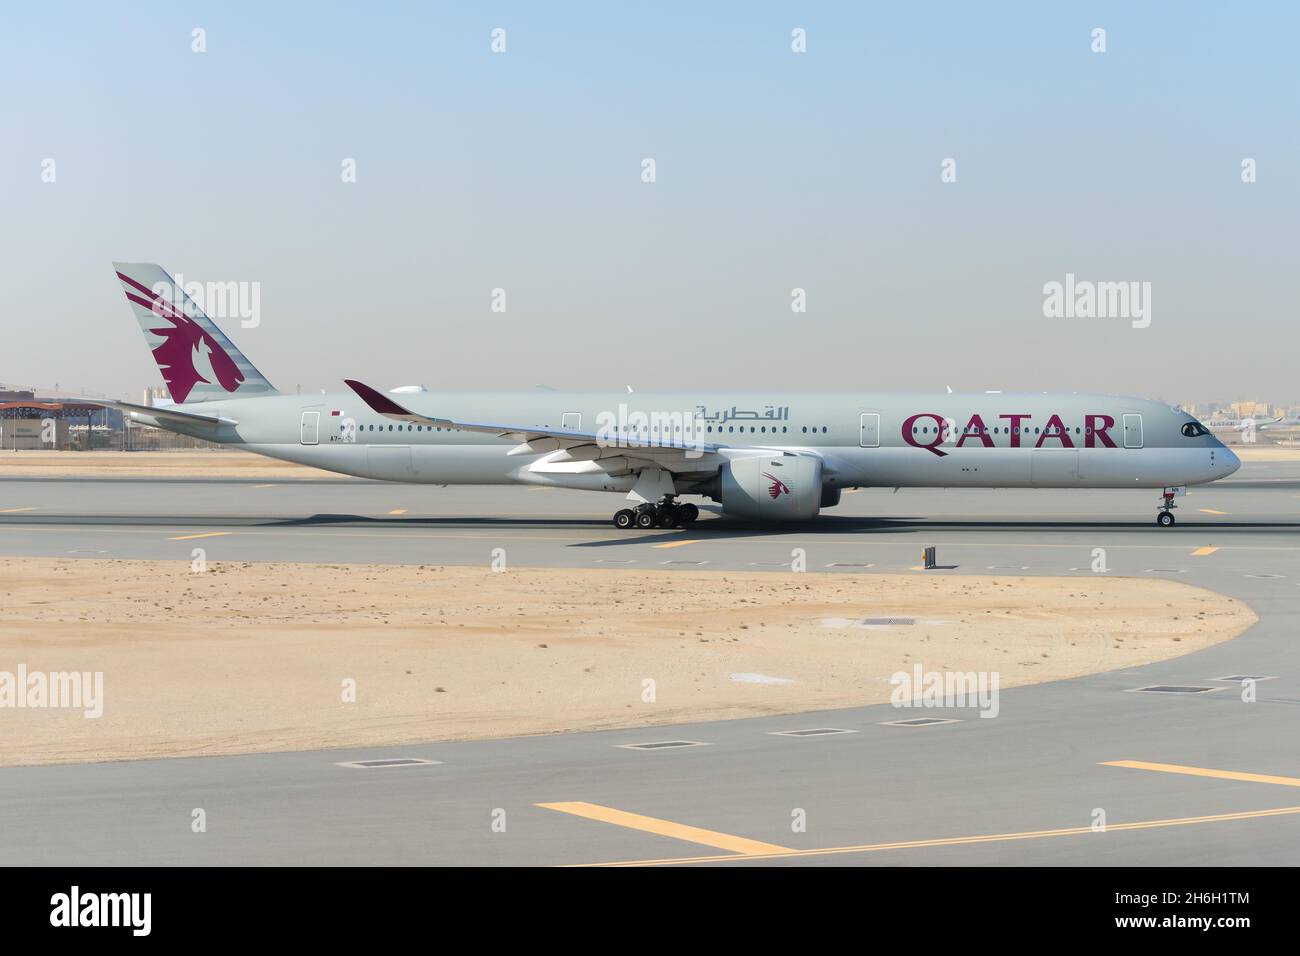 Qatar Airways Airbus A350-1000 plane at Doha Airport in Qatar. Modern A350 aircraft taxiing. Stock Photo